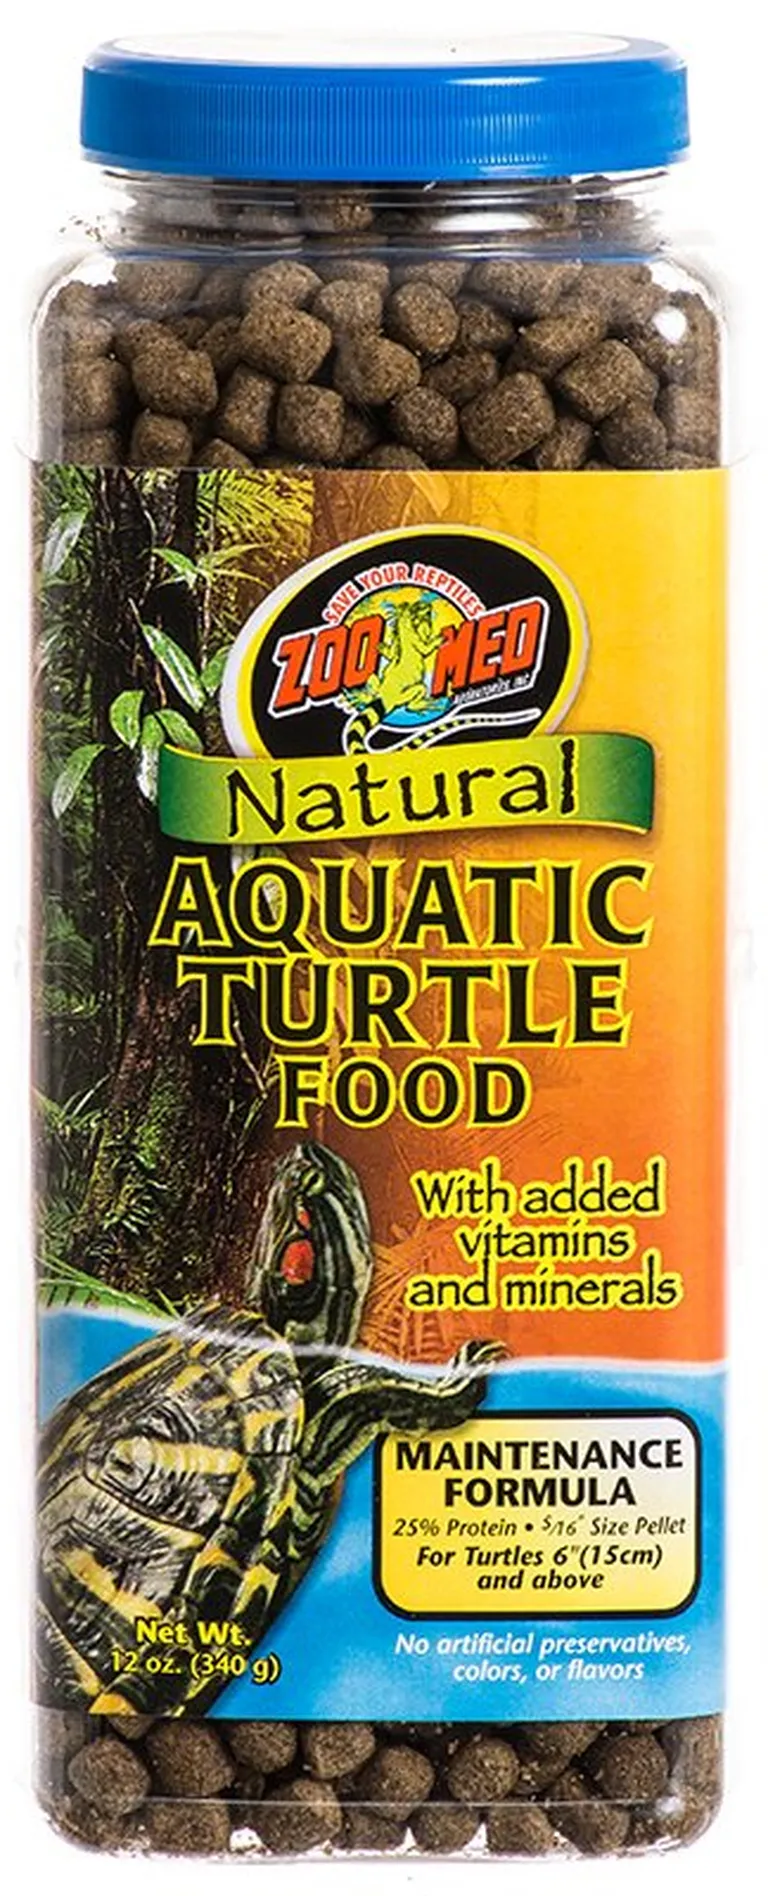 Zoo Med Natural Aquatic Turtle Food Maintenance Formula Photo 1